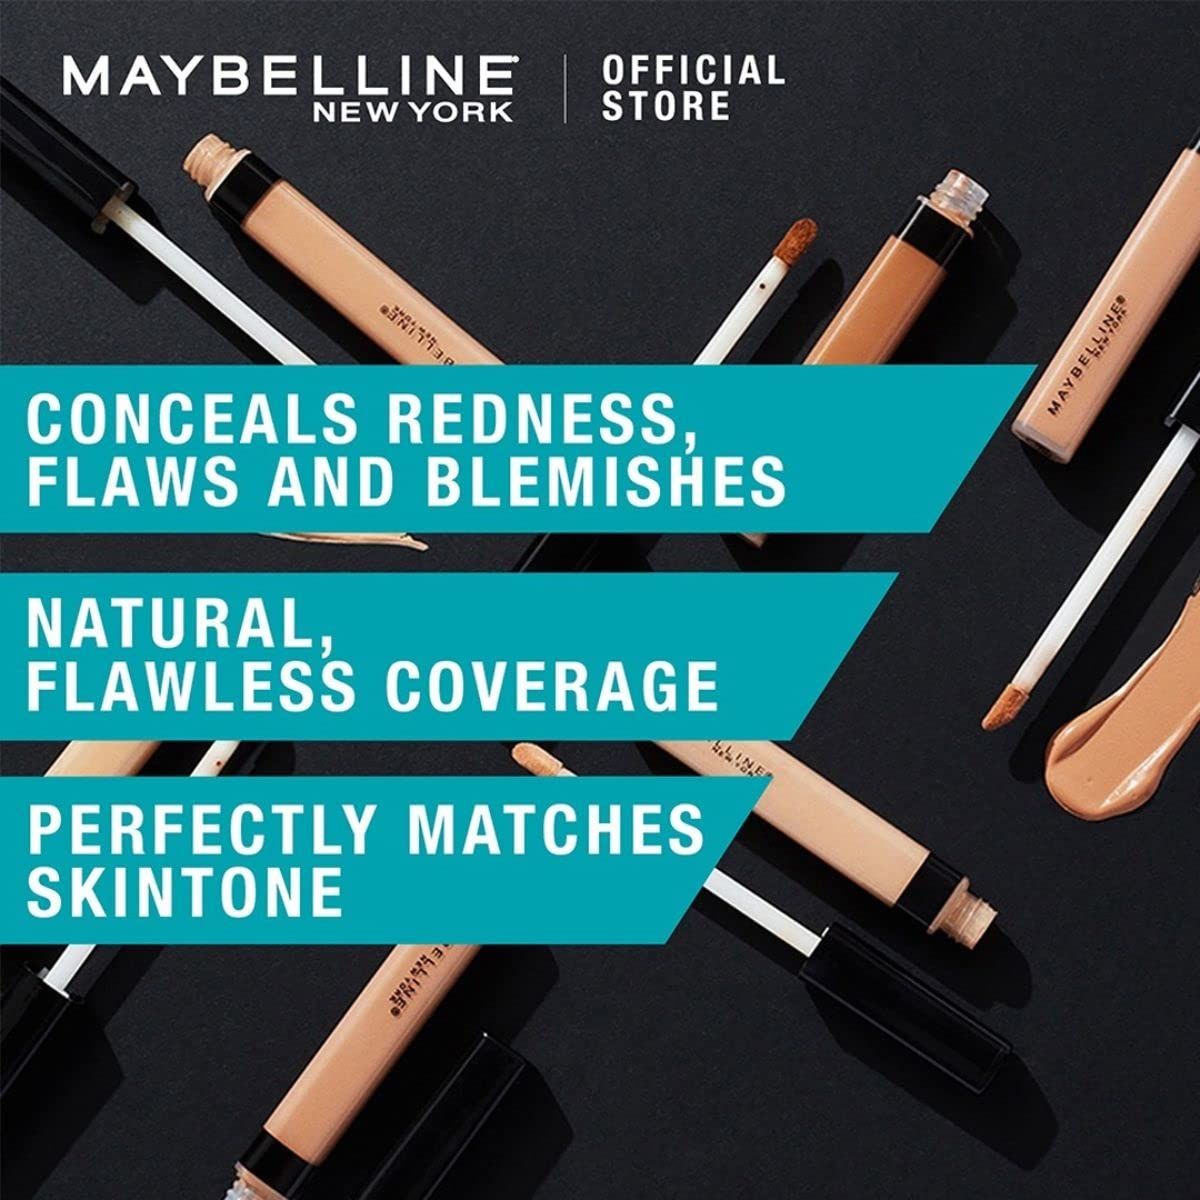 Maybelline Matte and Poreless Ultra Blendable New York Full Coverage Concealer Lotion - Fit Me, 36 Golden Caramel, 6.8ml